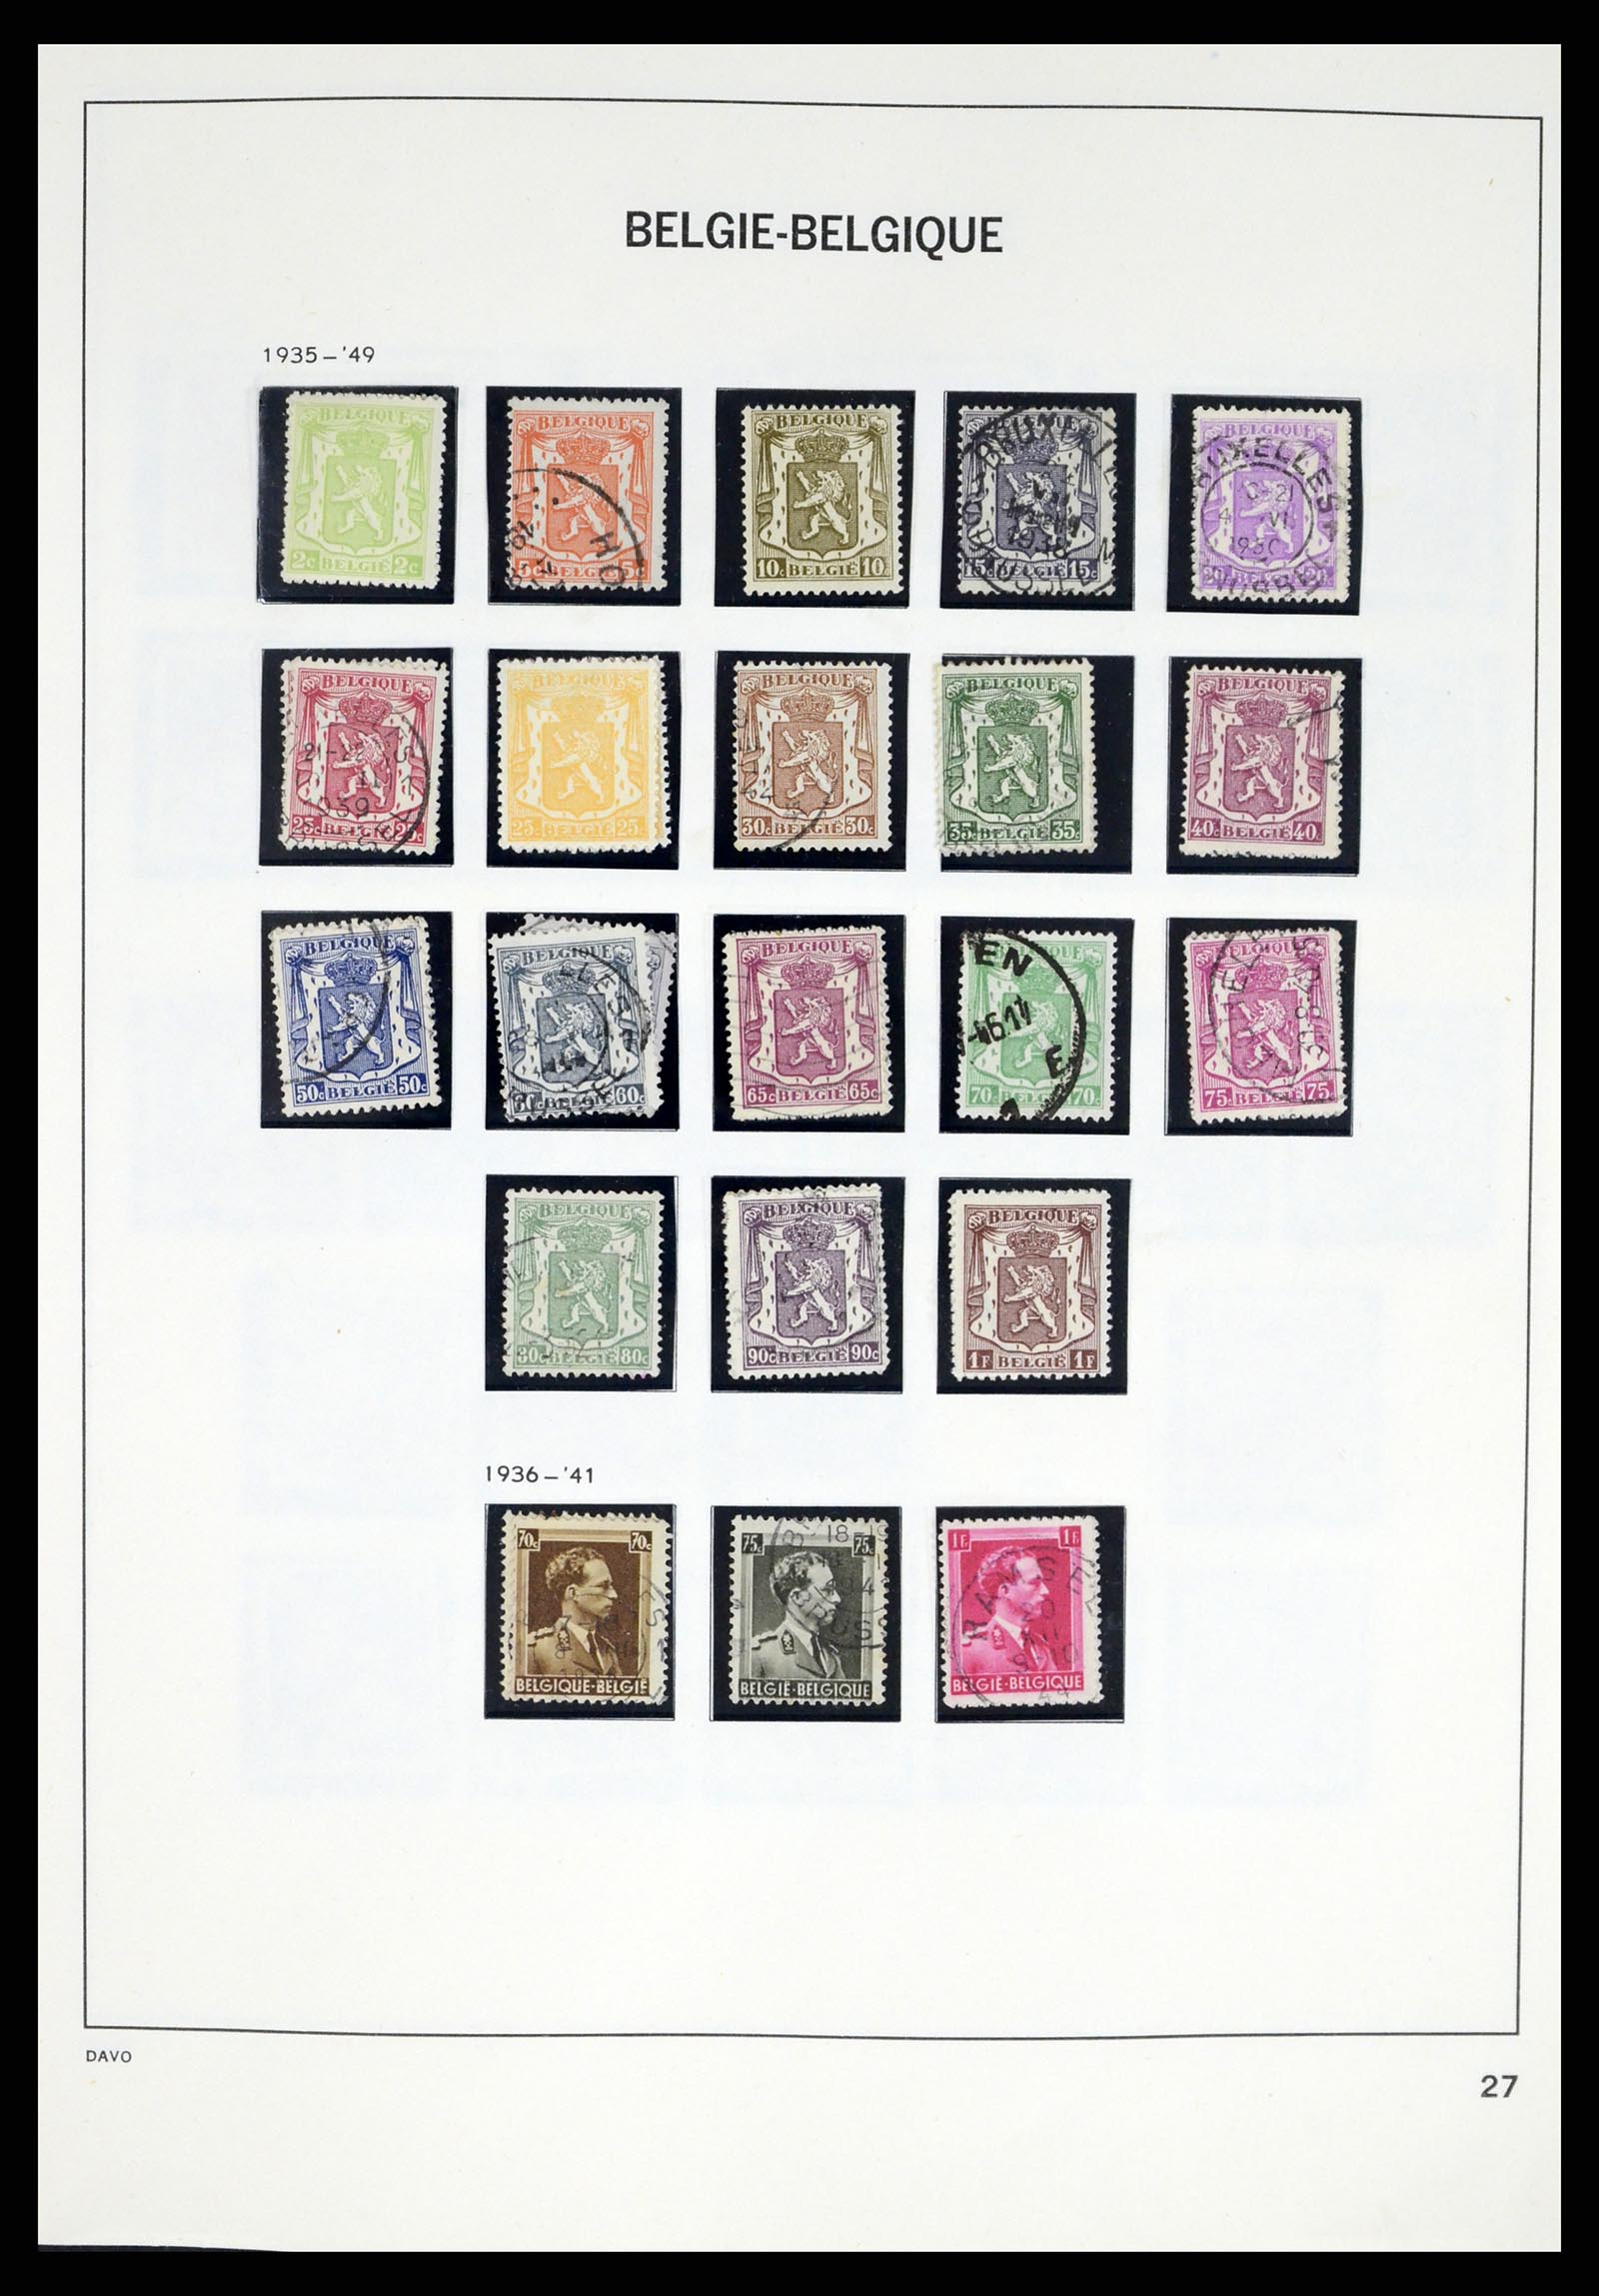 37367 025 - Stamp collection 37367 Belgium 1849-2003.